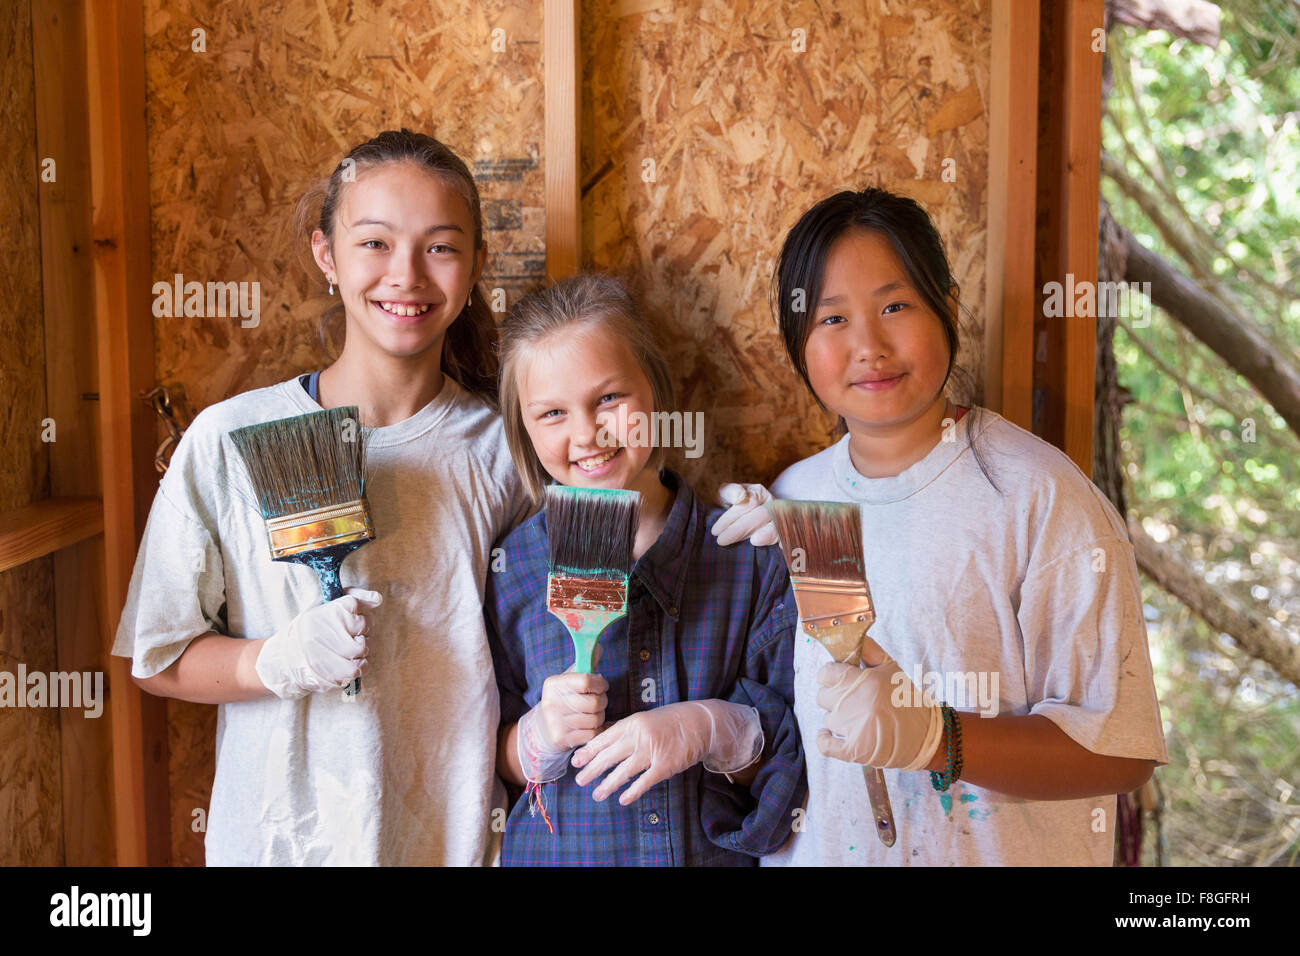 Smiling girls painting house Stock Photo